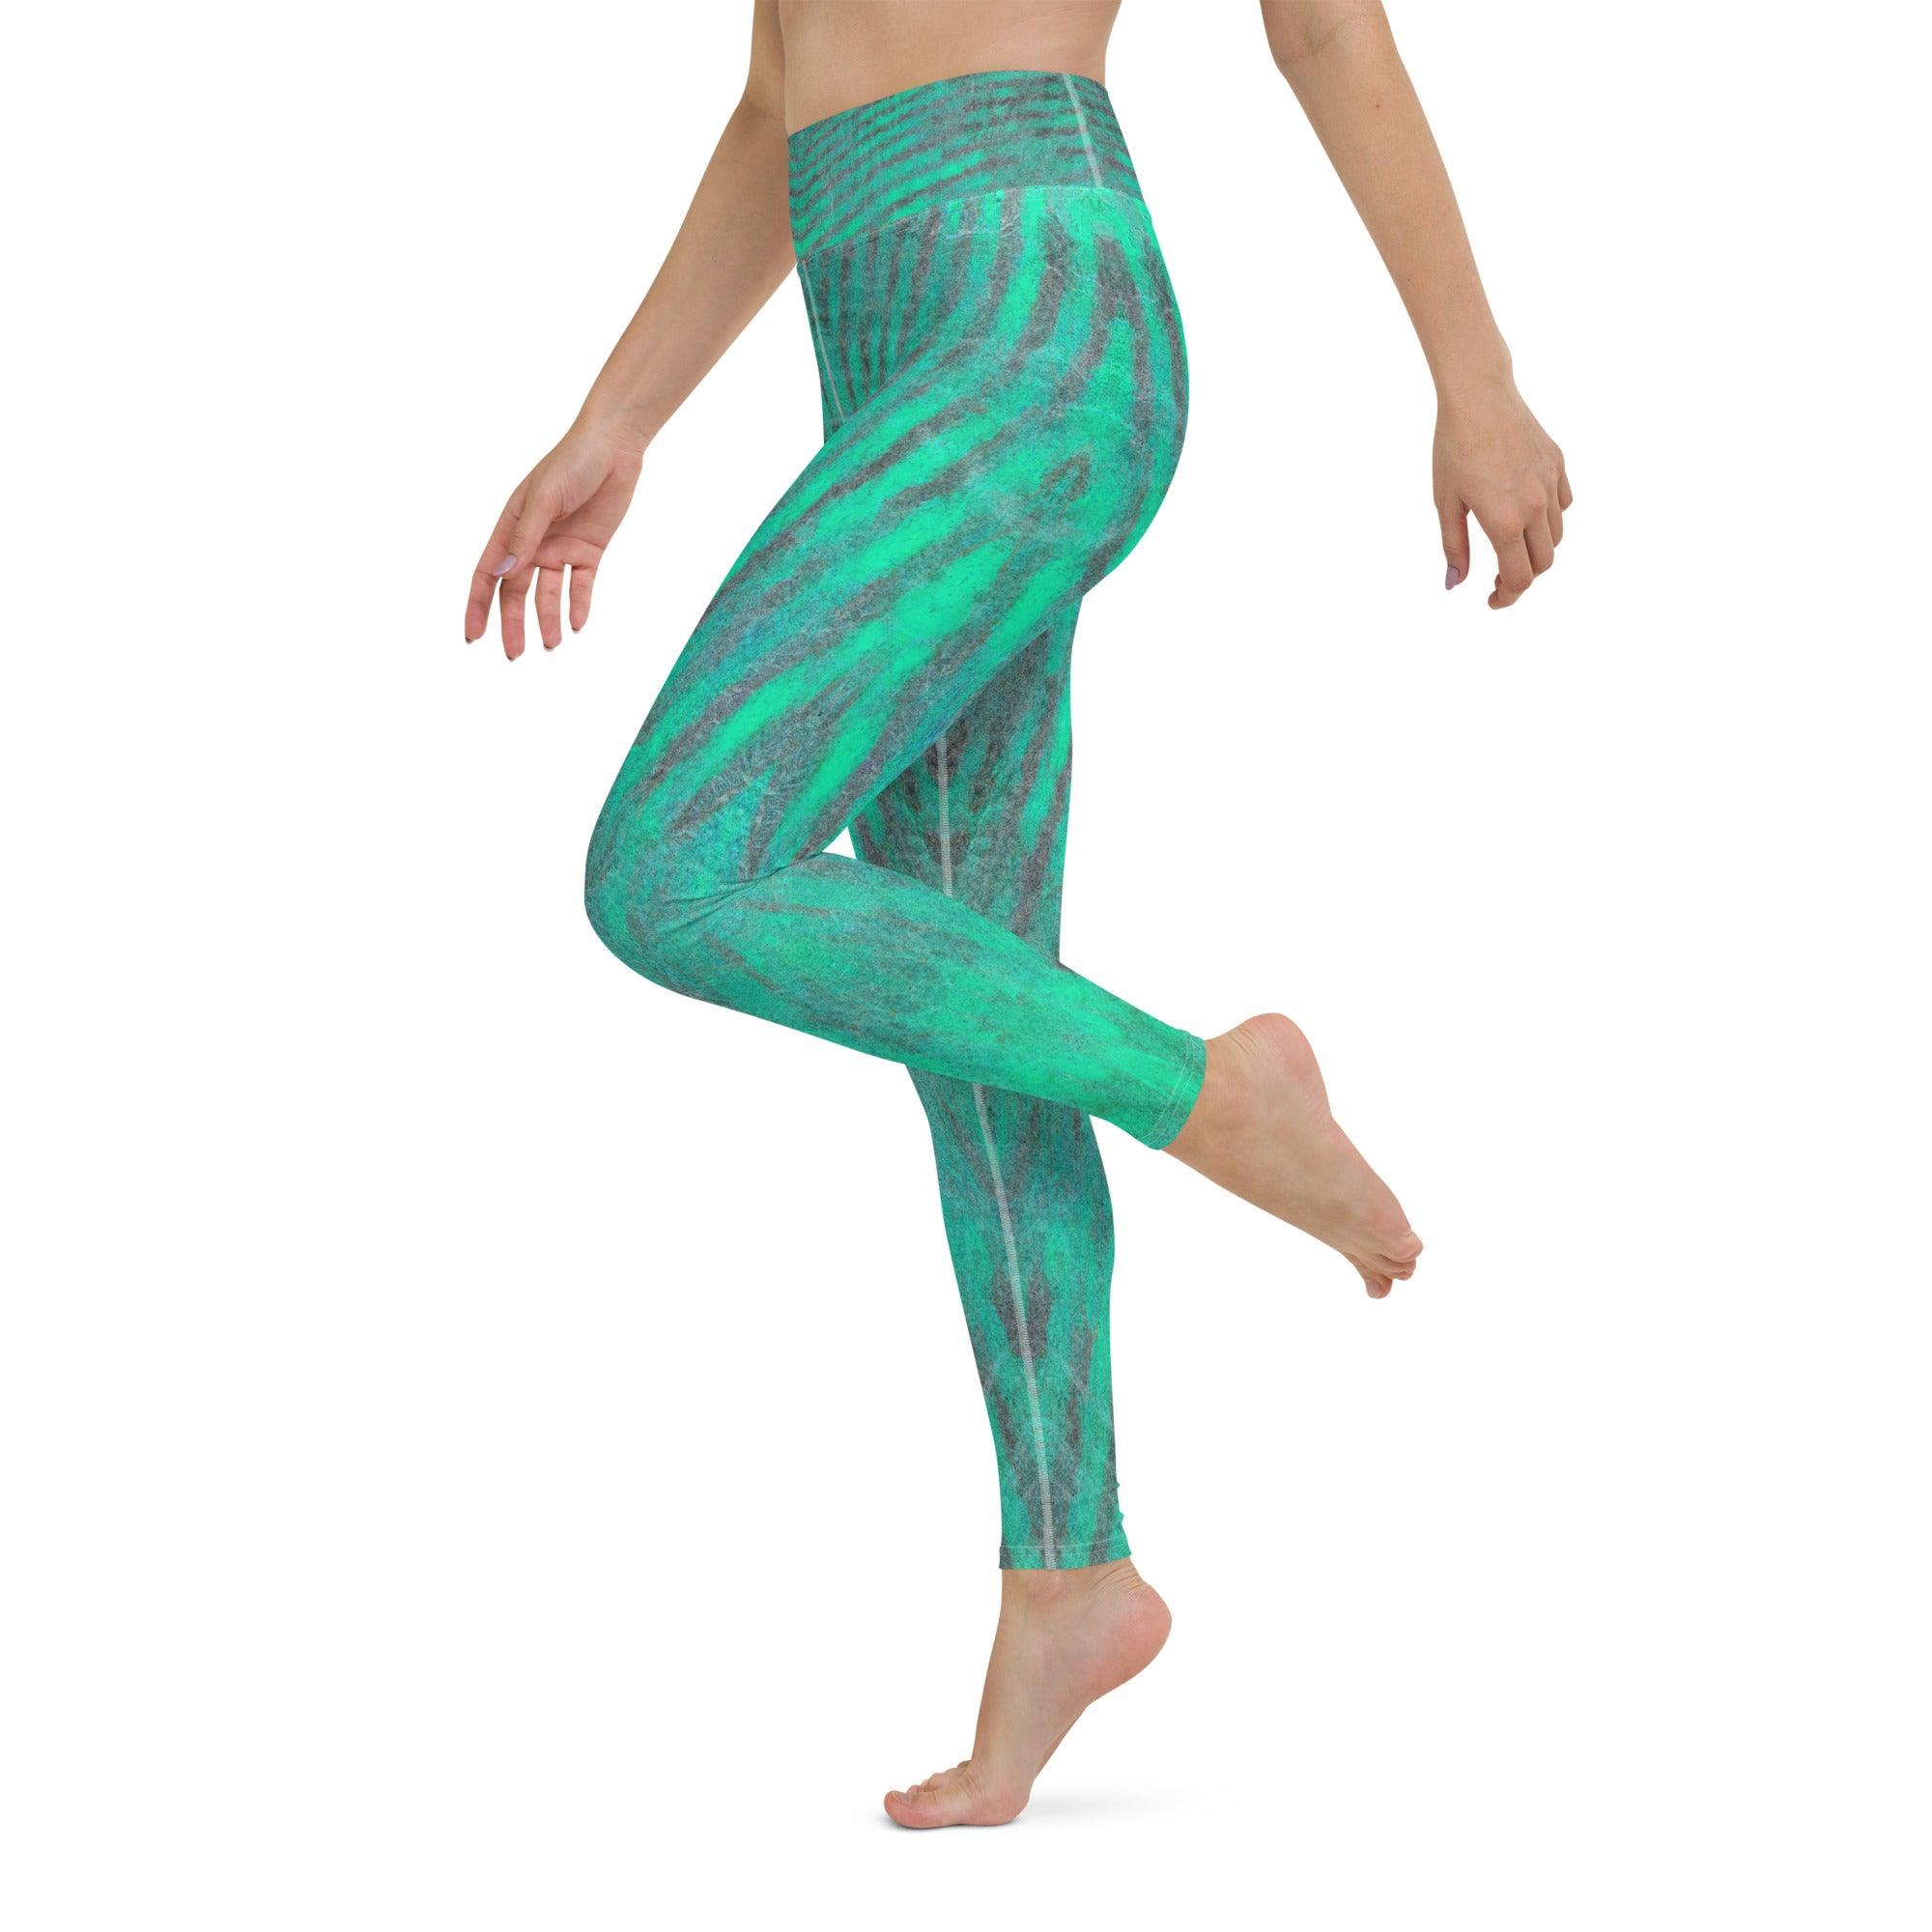 Stretchy Aqua Yoga Leggings for optimal movement and flexibility